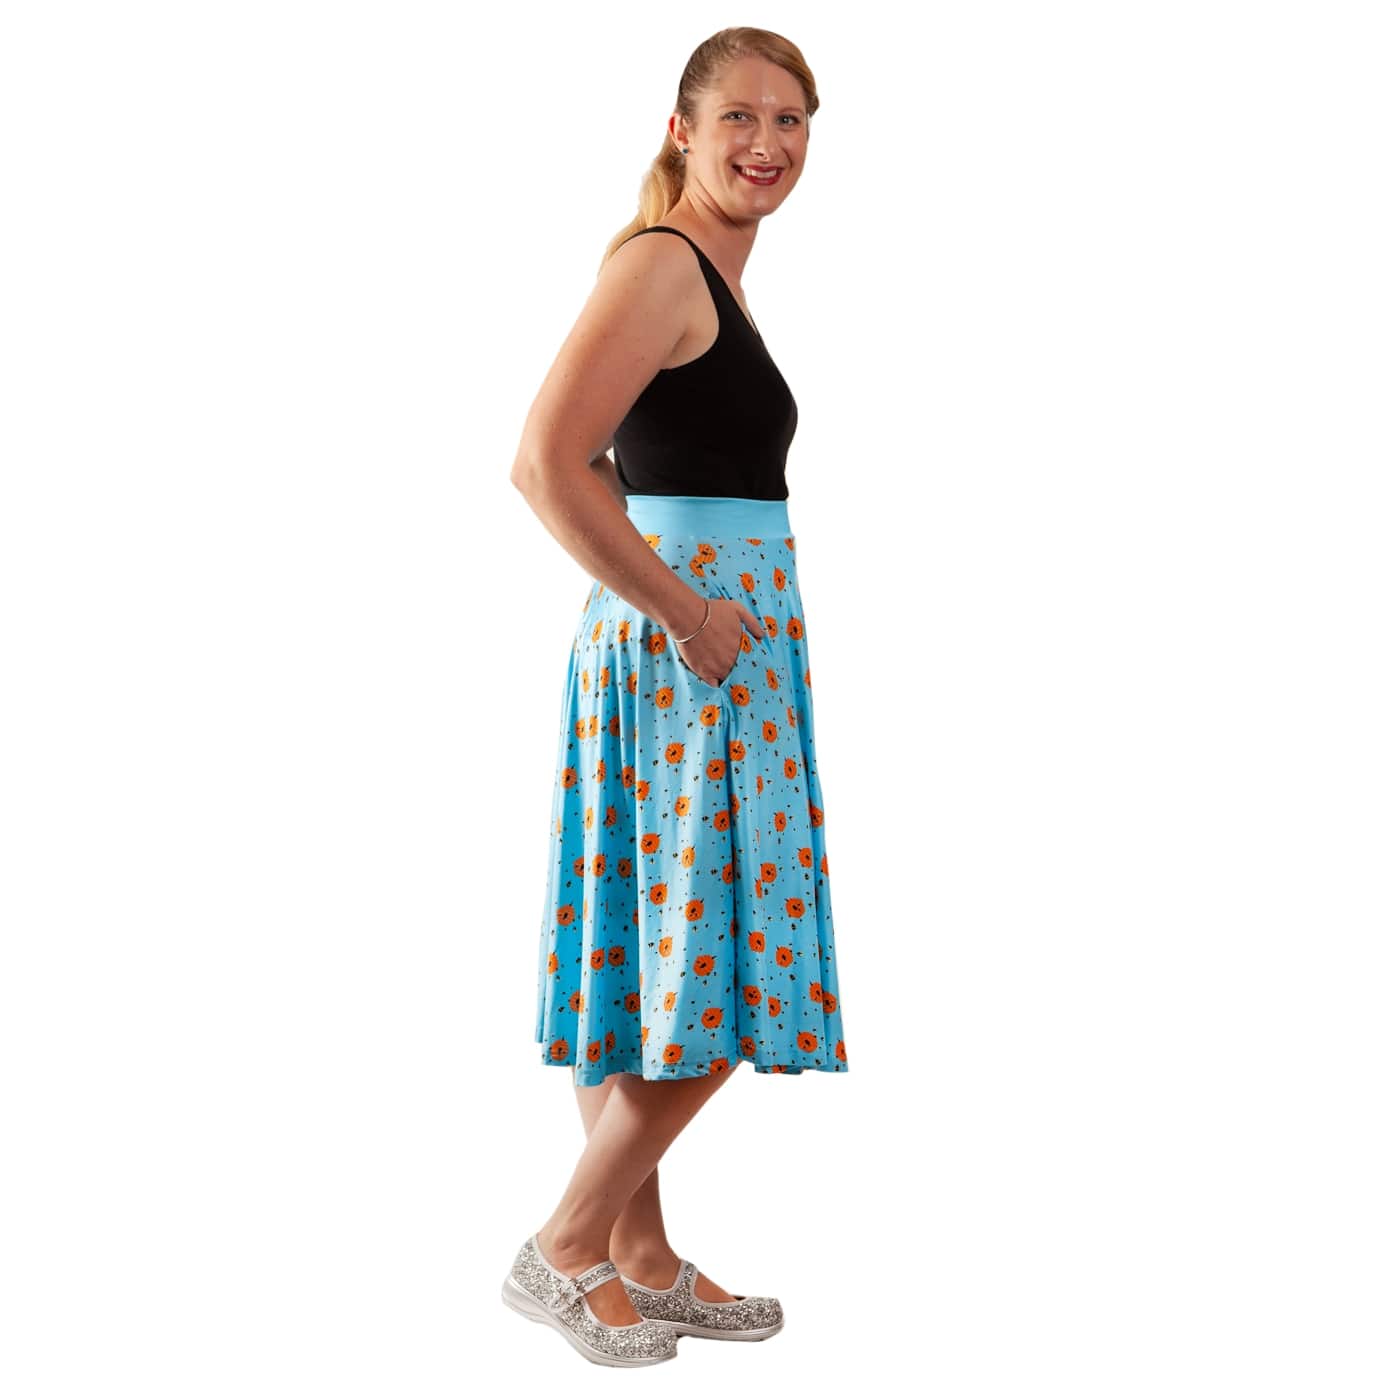 Hive Swishy Skirt by RainbowsAndFairies.com.au (Bees - Beehive - Animal Print - Queen Bee - Circle Skirt With Pockets - Mod Retro - Rockabilly) - SKU: CL_SWISH_BHIVE_ORG - Pic-06